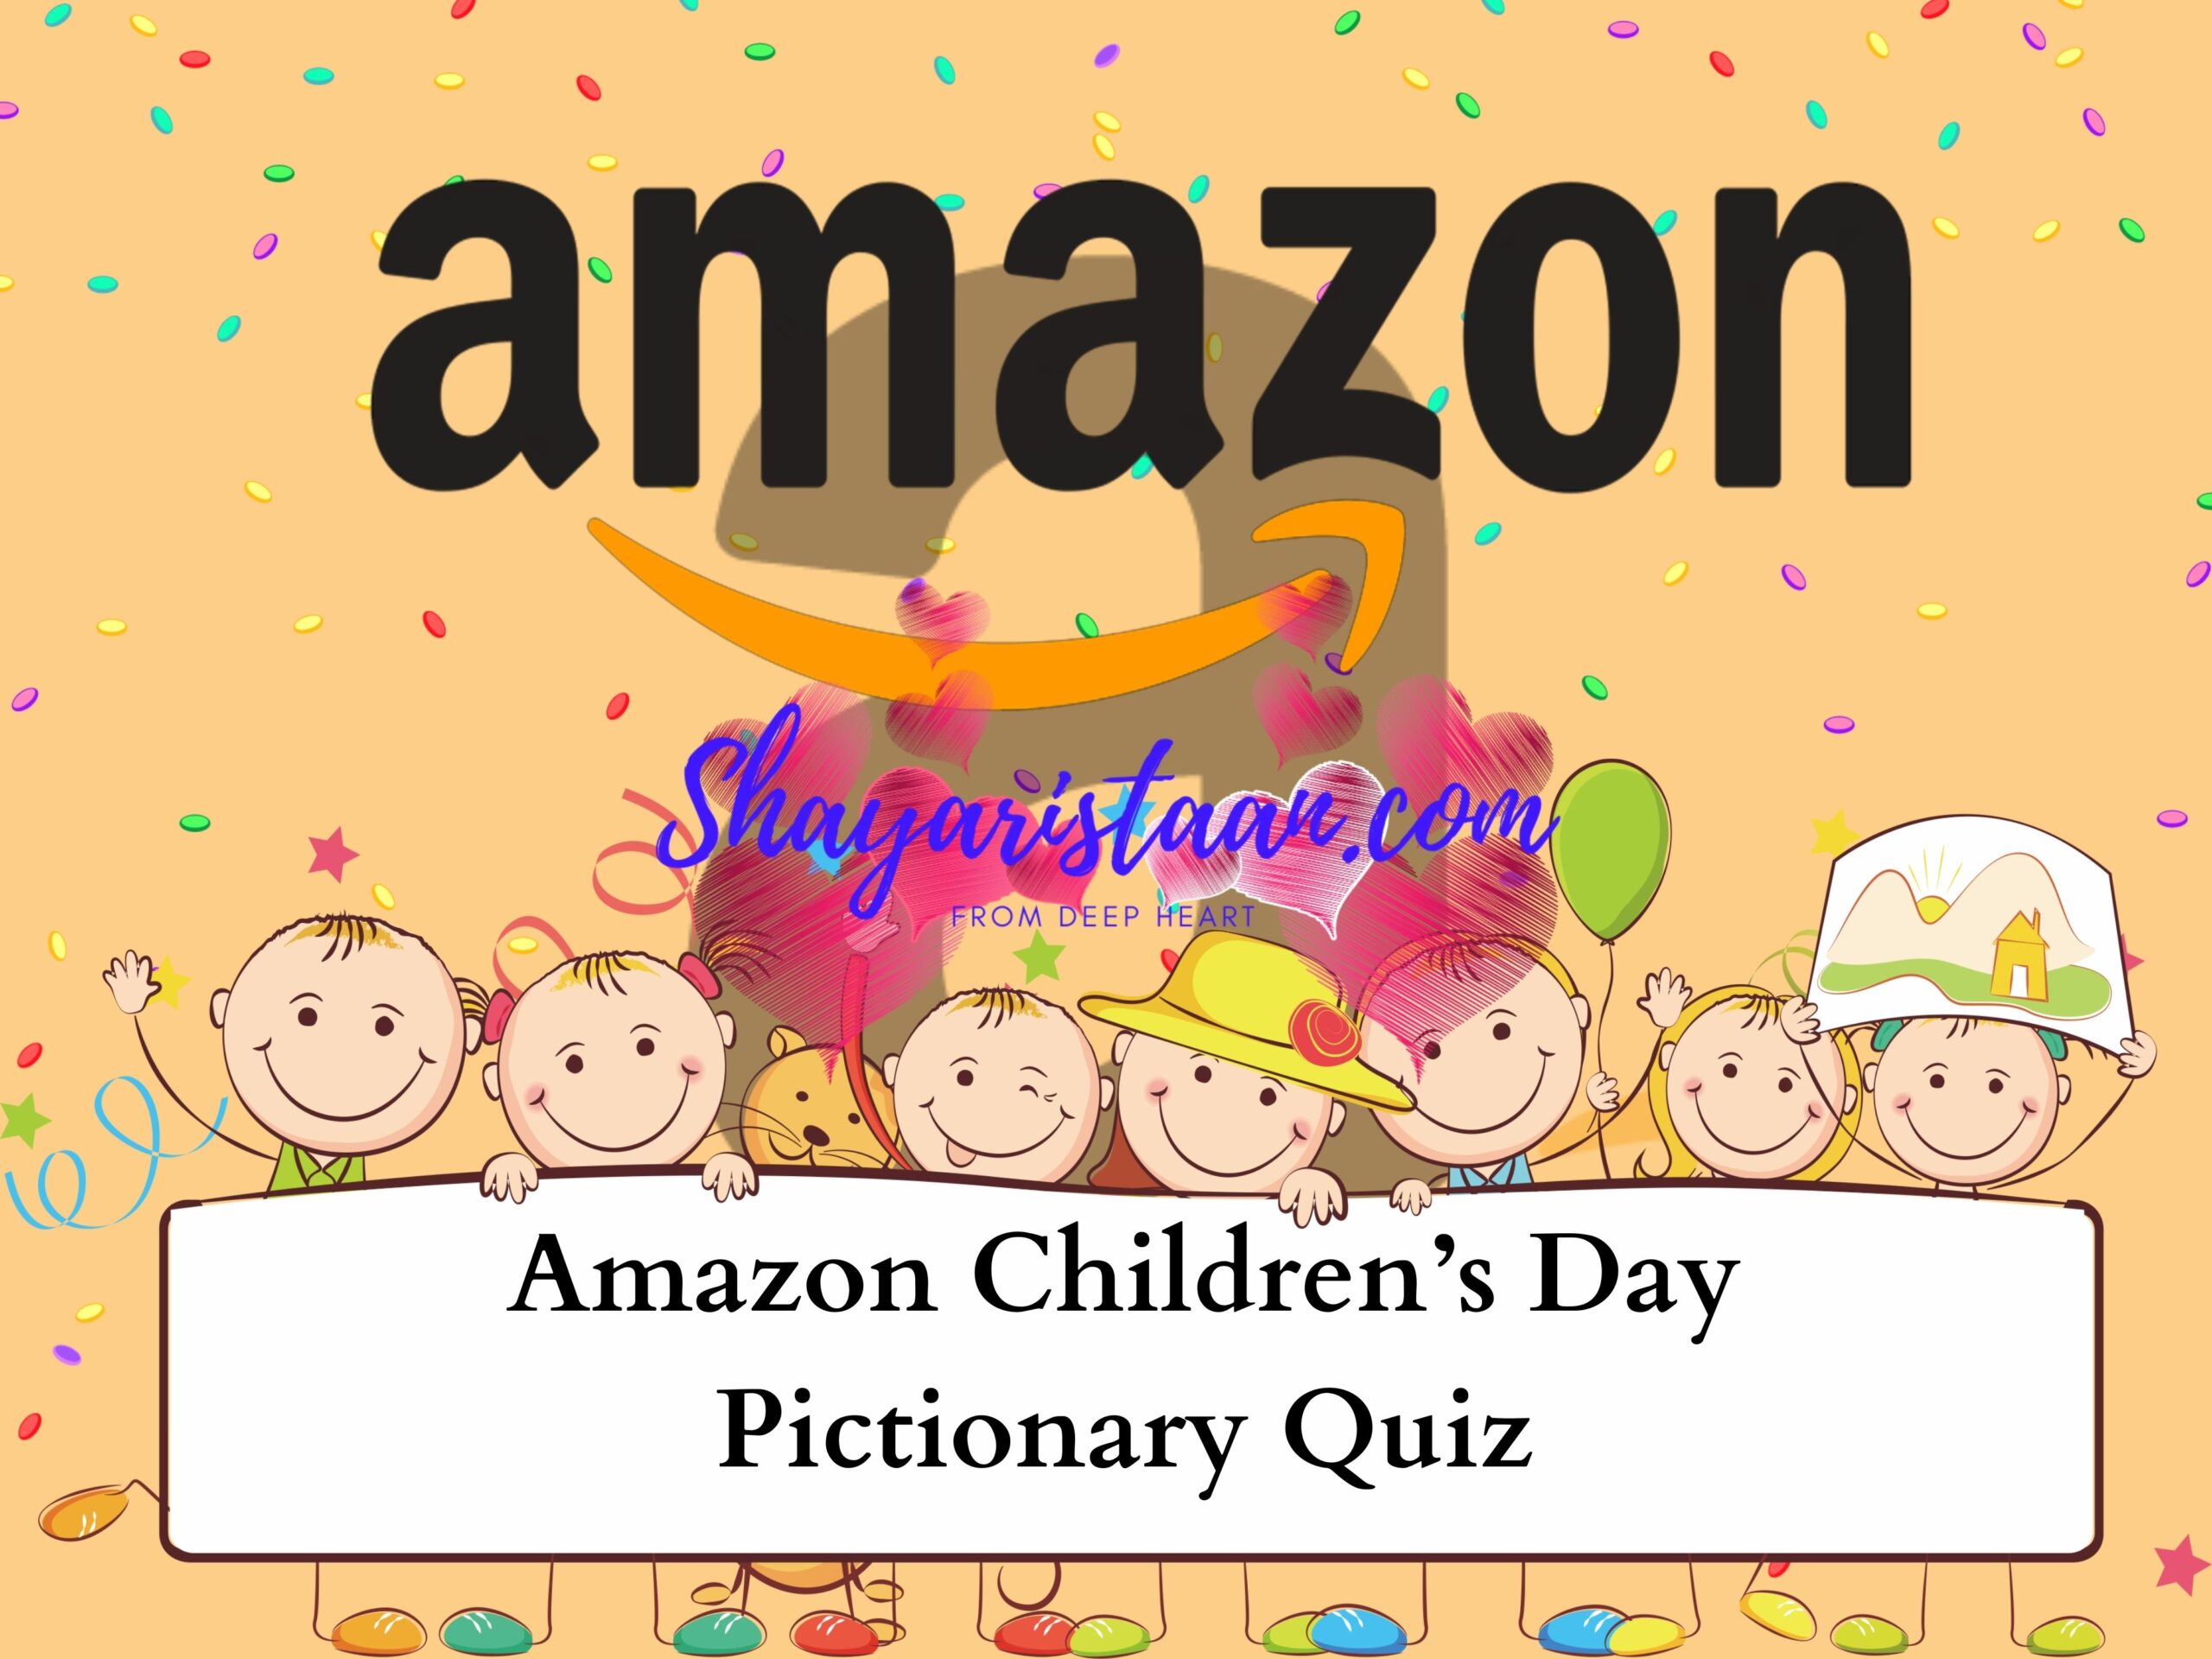 Amazon Children’s Day Pictionary Quiz Answer